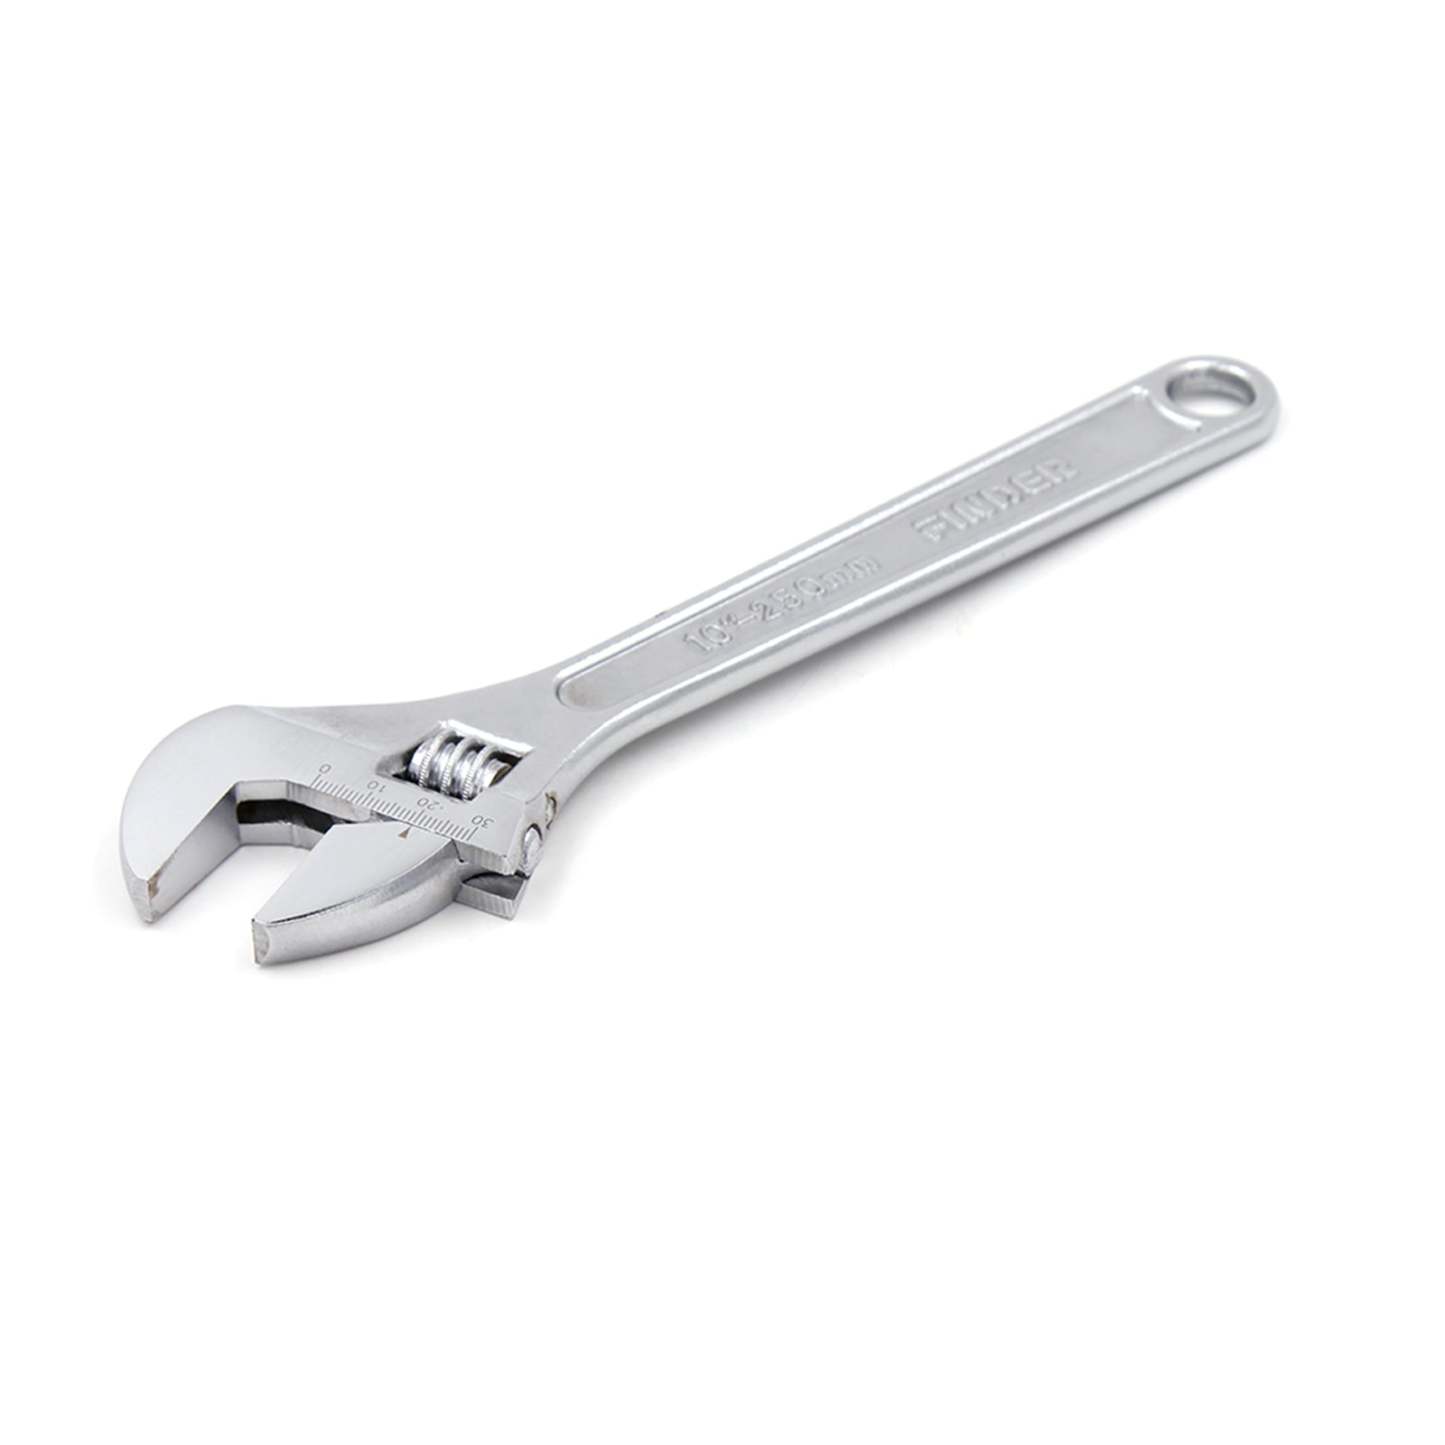 FINDER - 12 Inch Adjustable Wrench